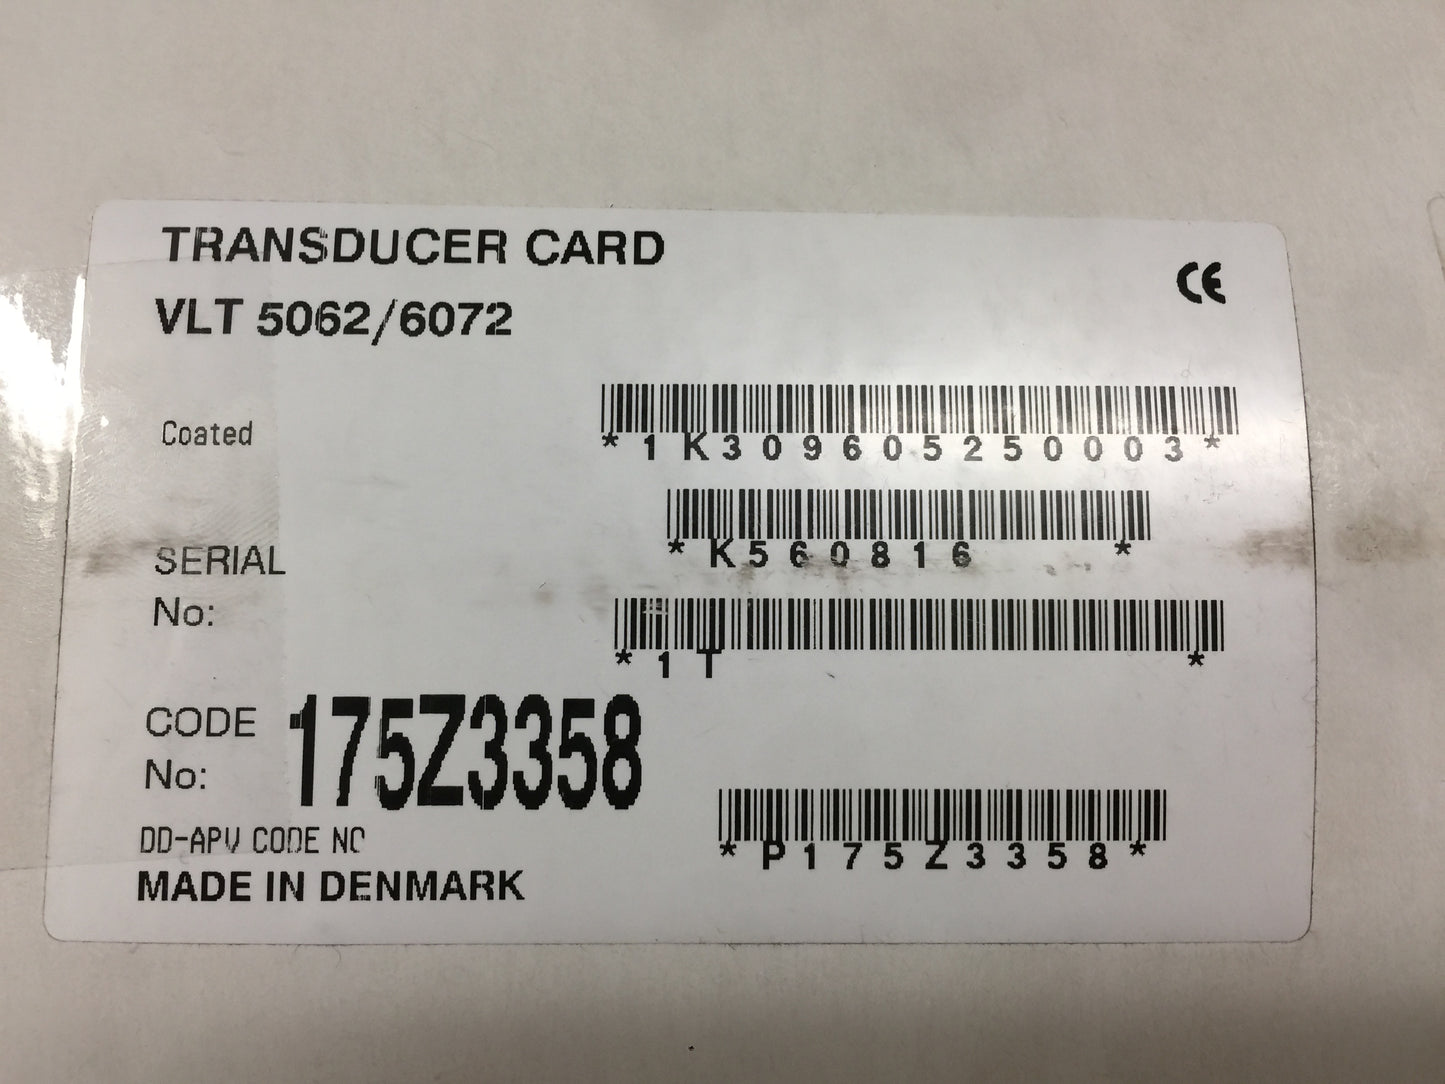 RELAY TRANSDUCER BOARD; SPARE RELAY CARD, VLT5062/6072